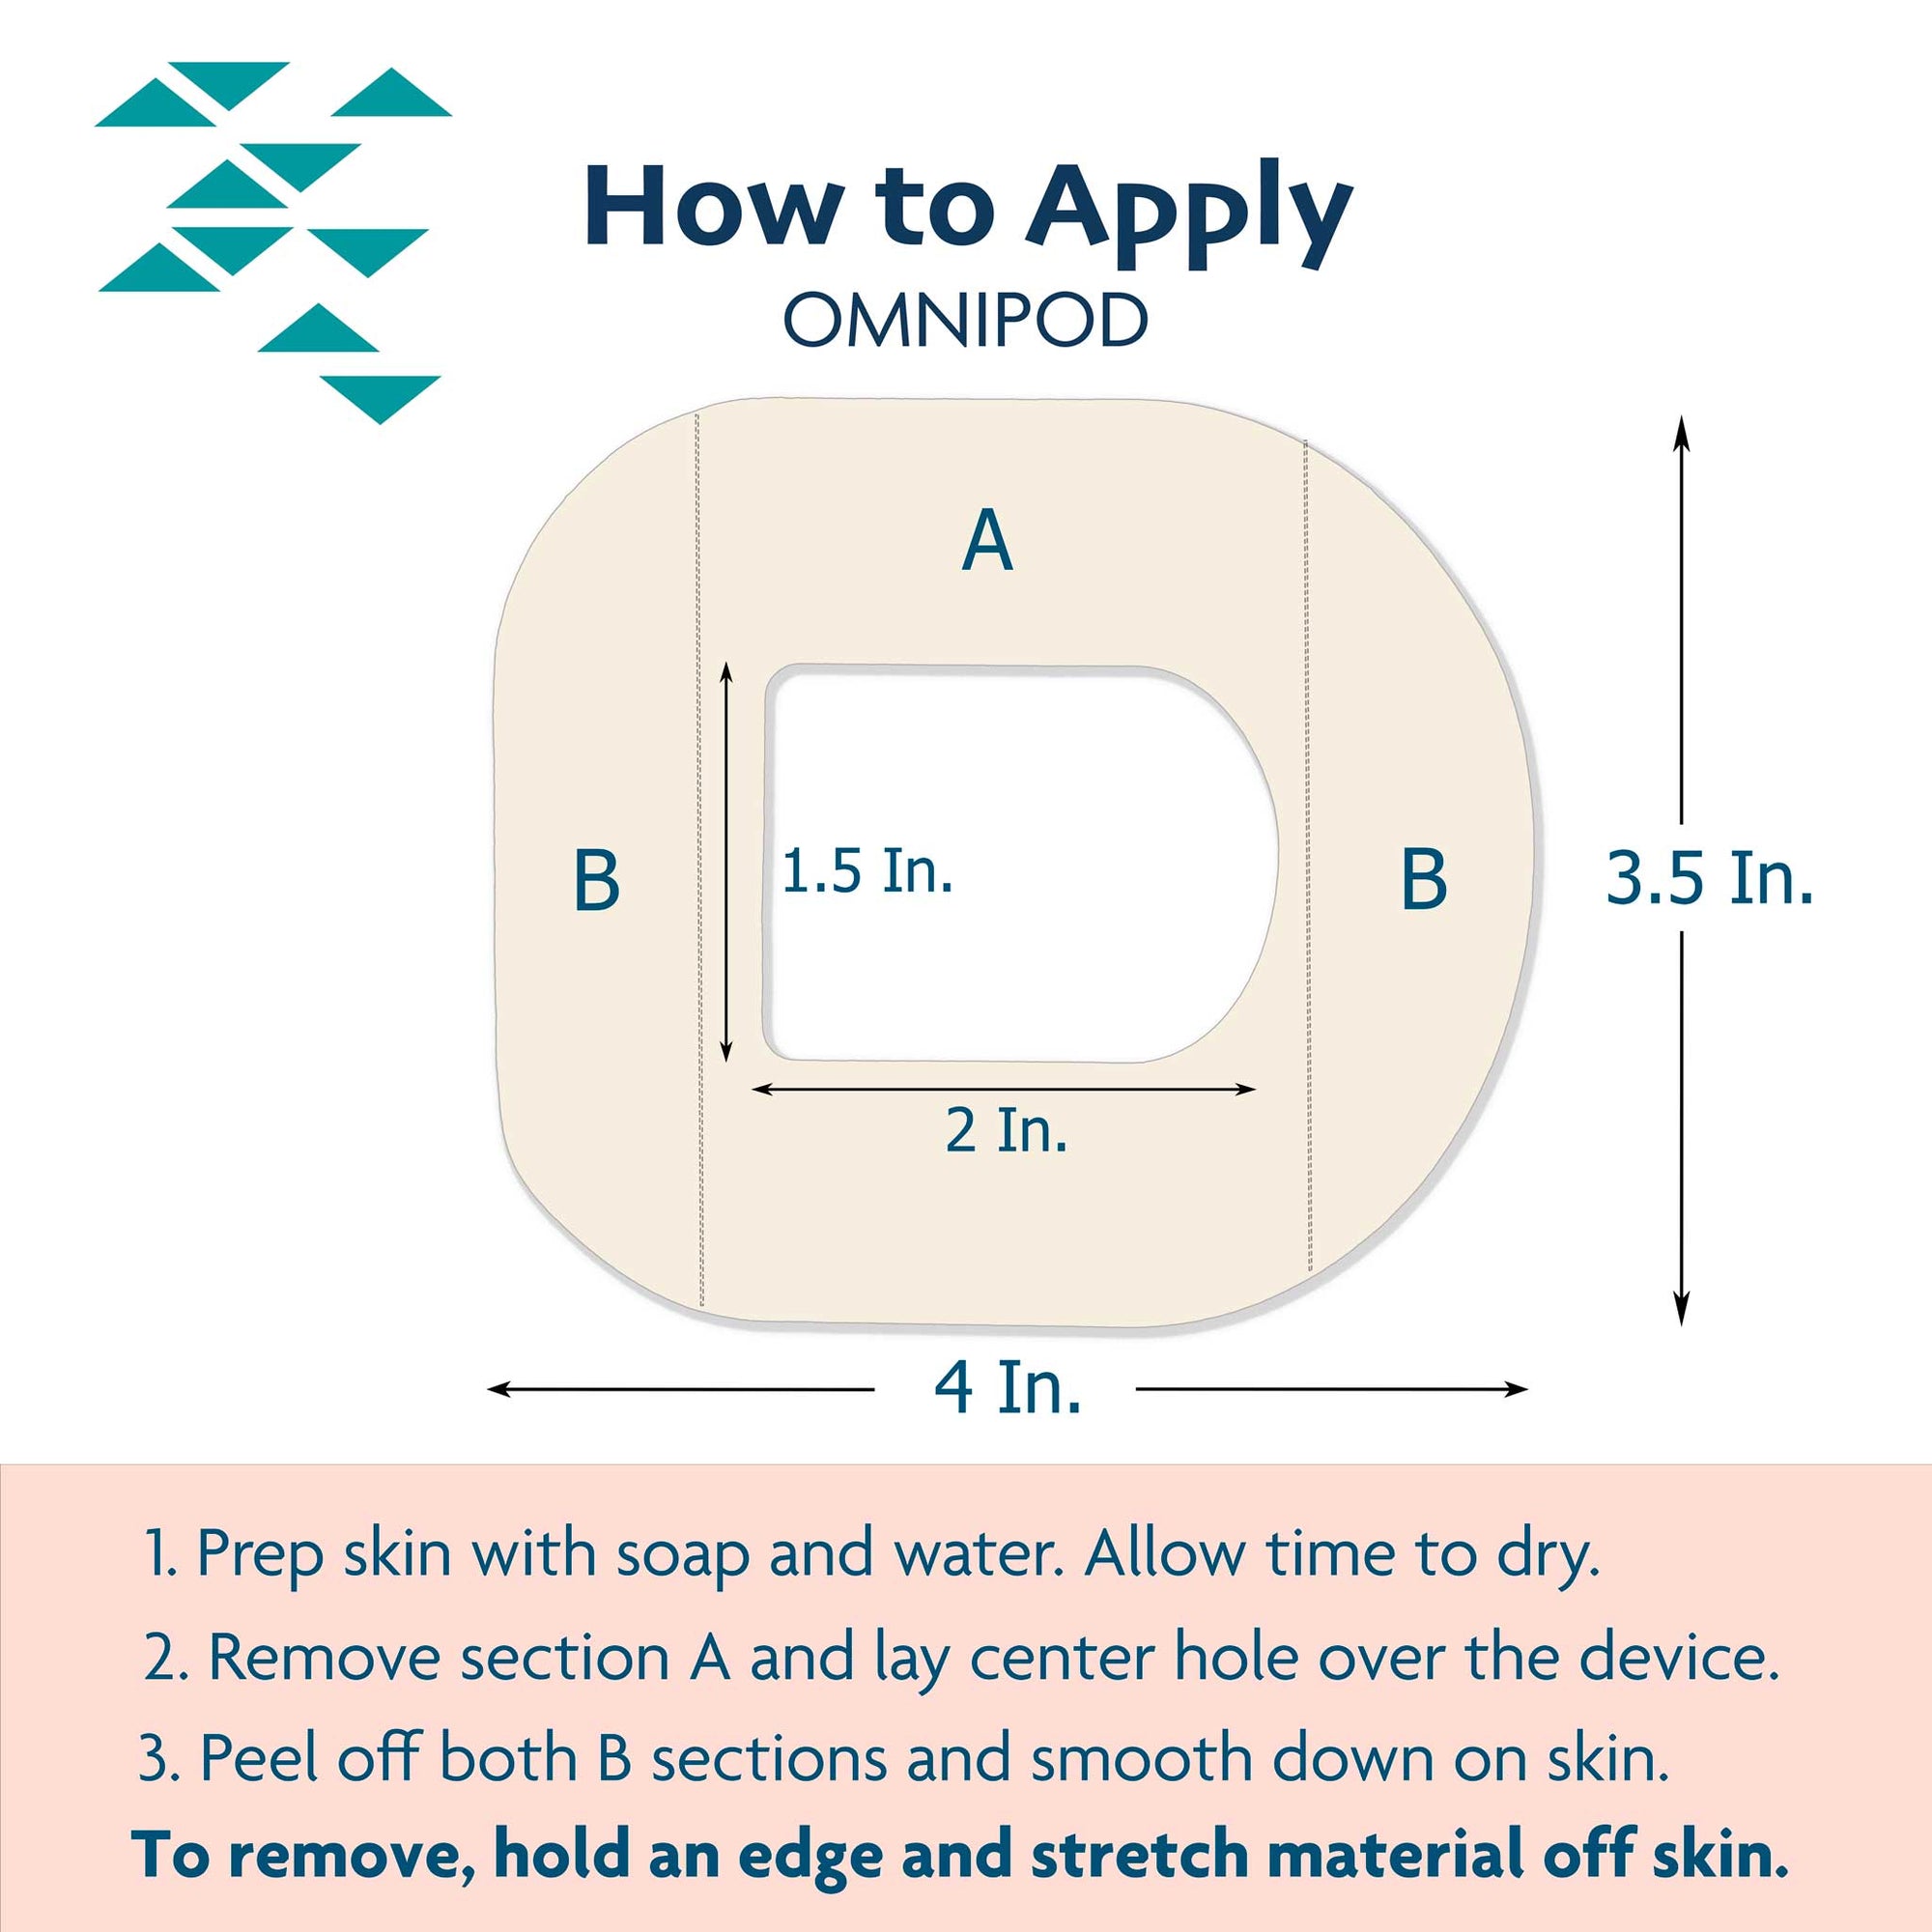 Proper application tutorial for Omnipod insulin pump